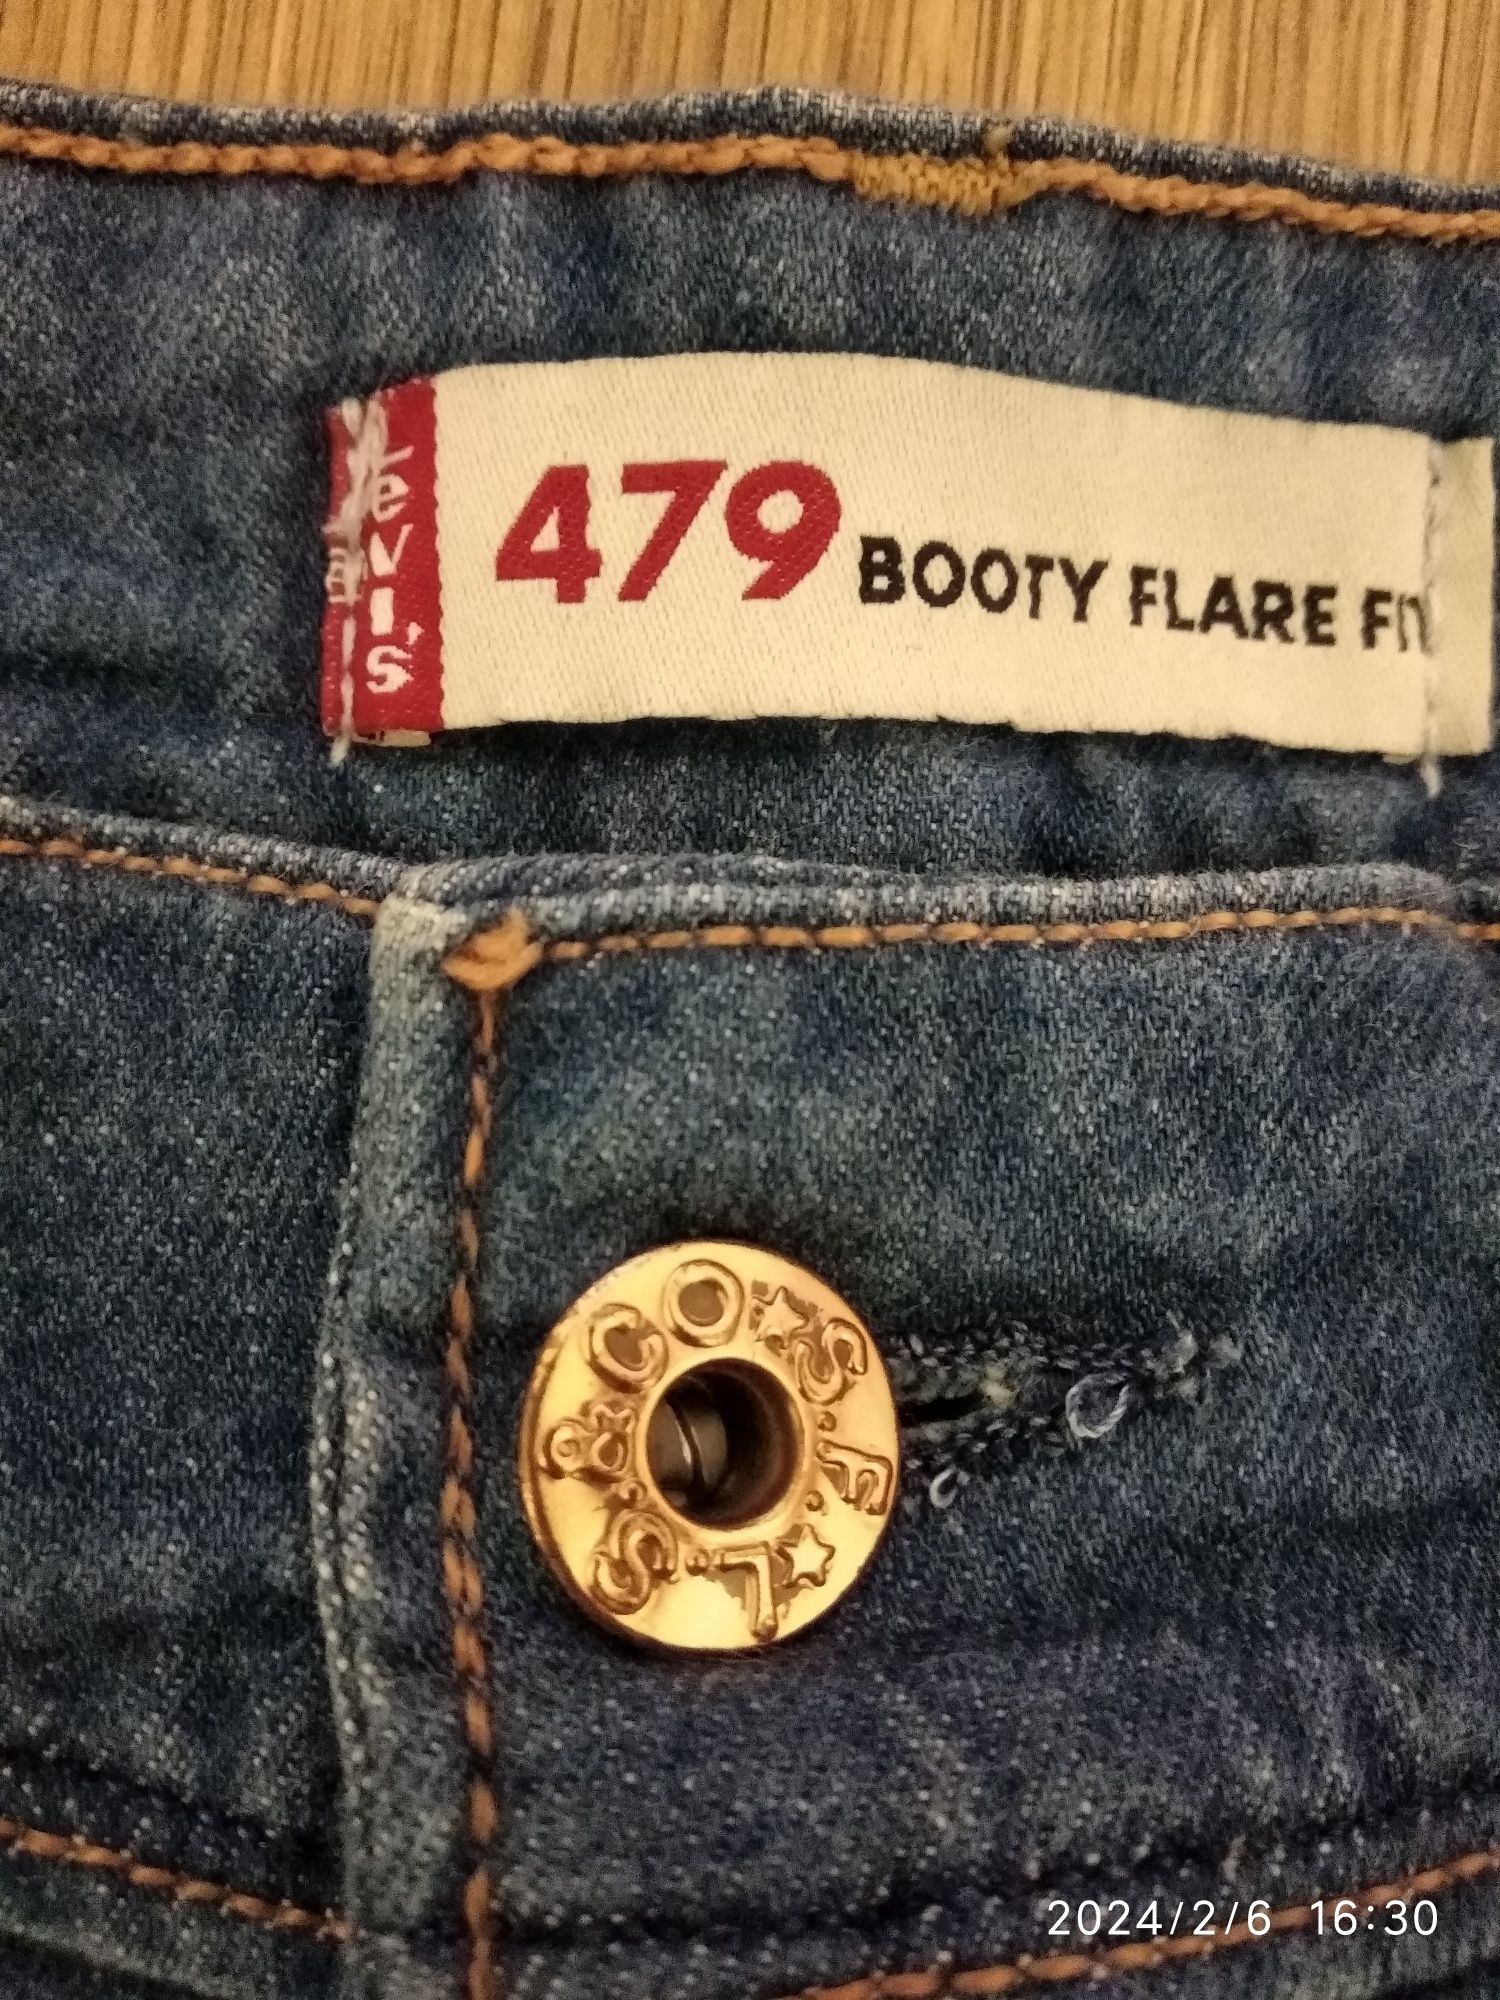 Джинсы Levi's 479 booty flare